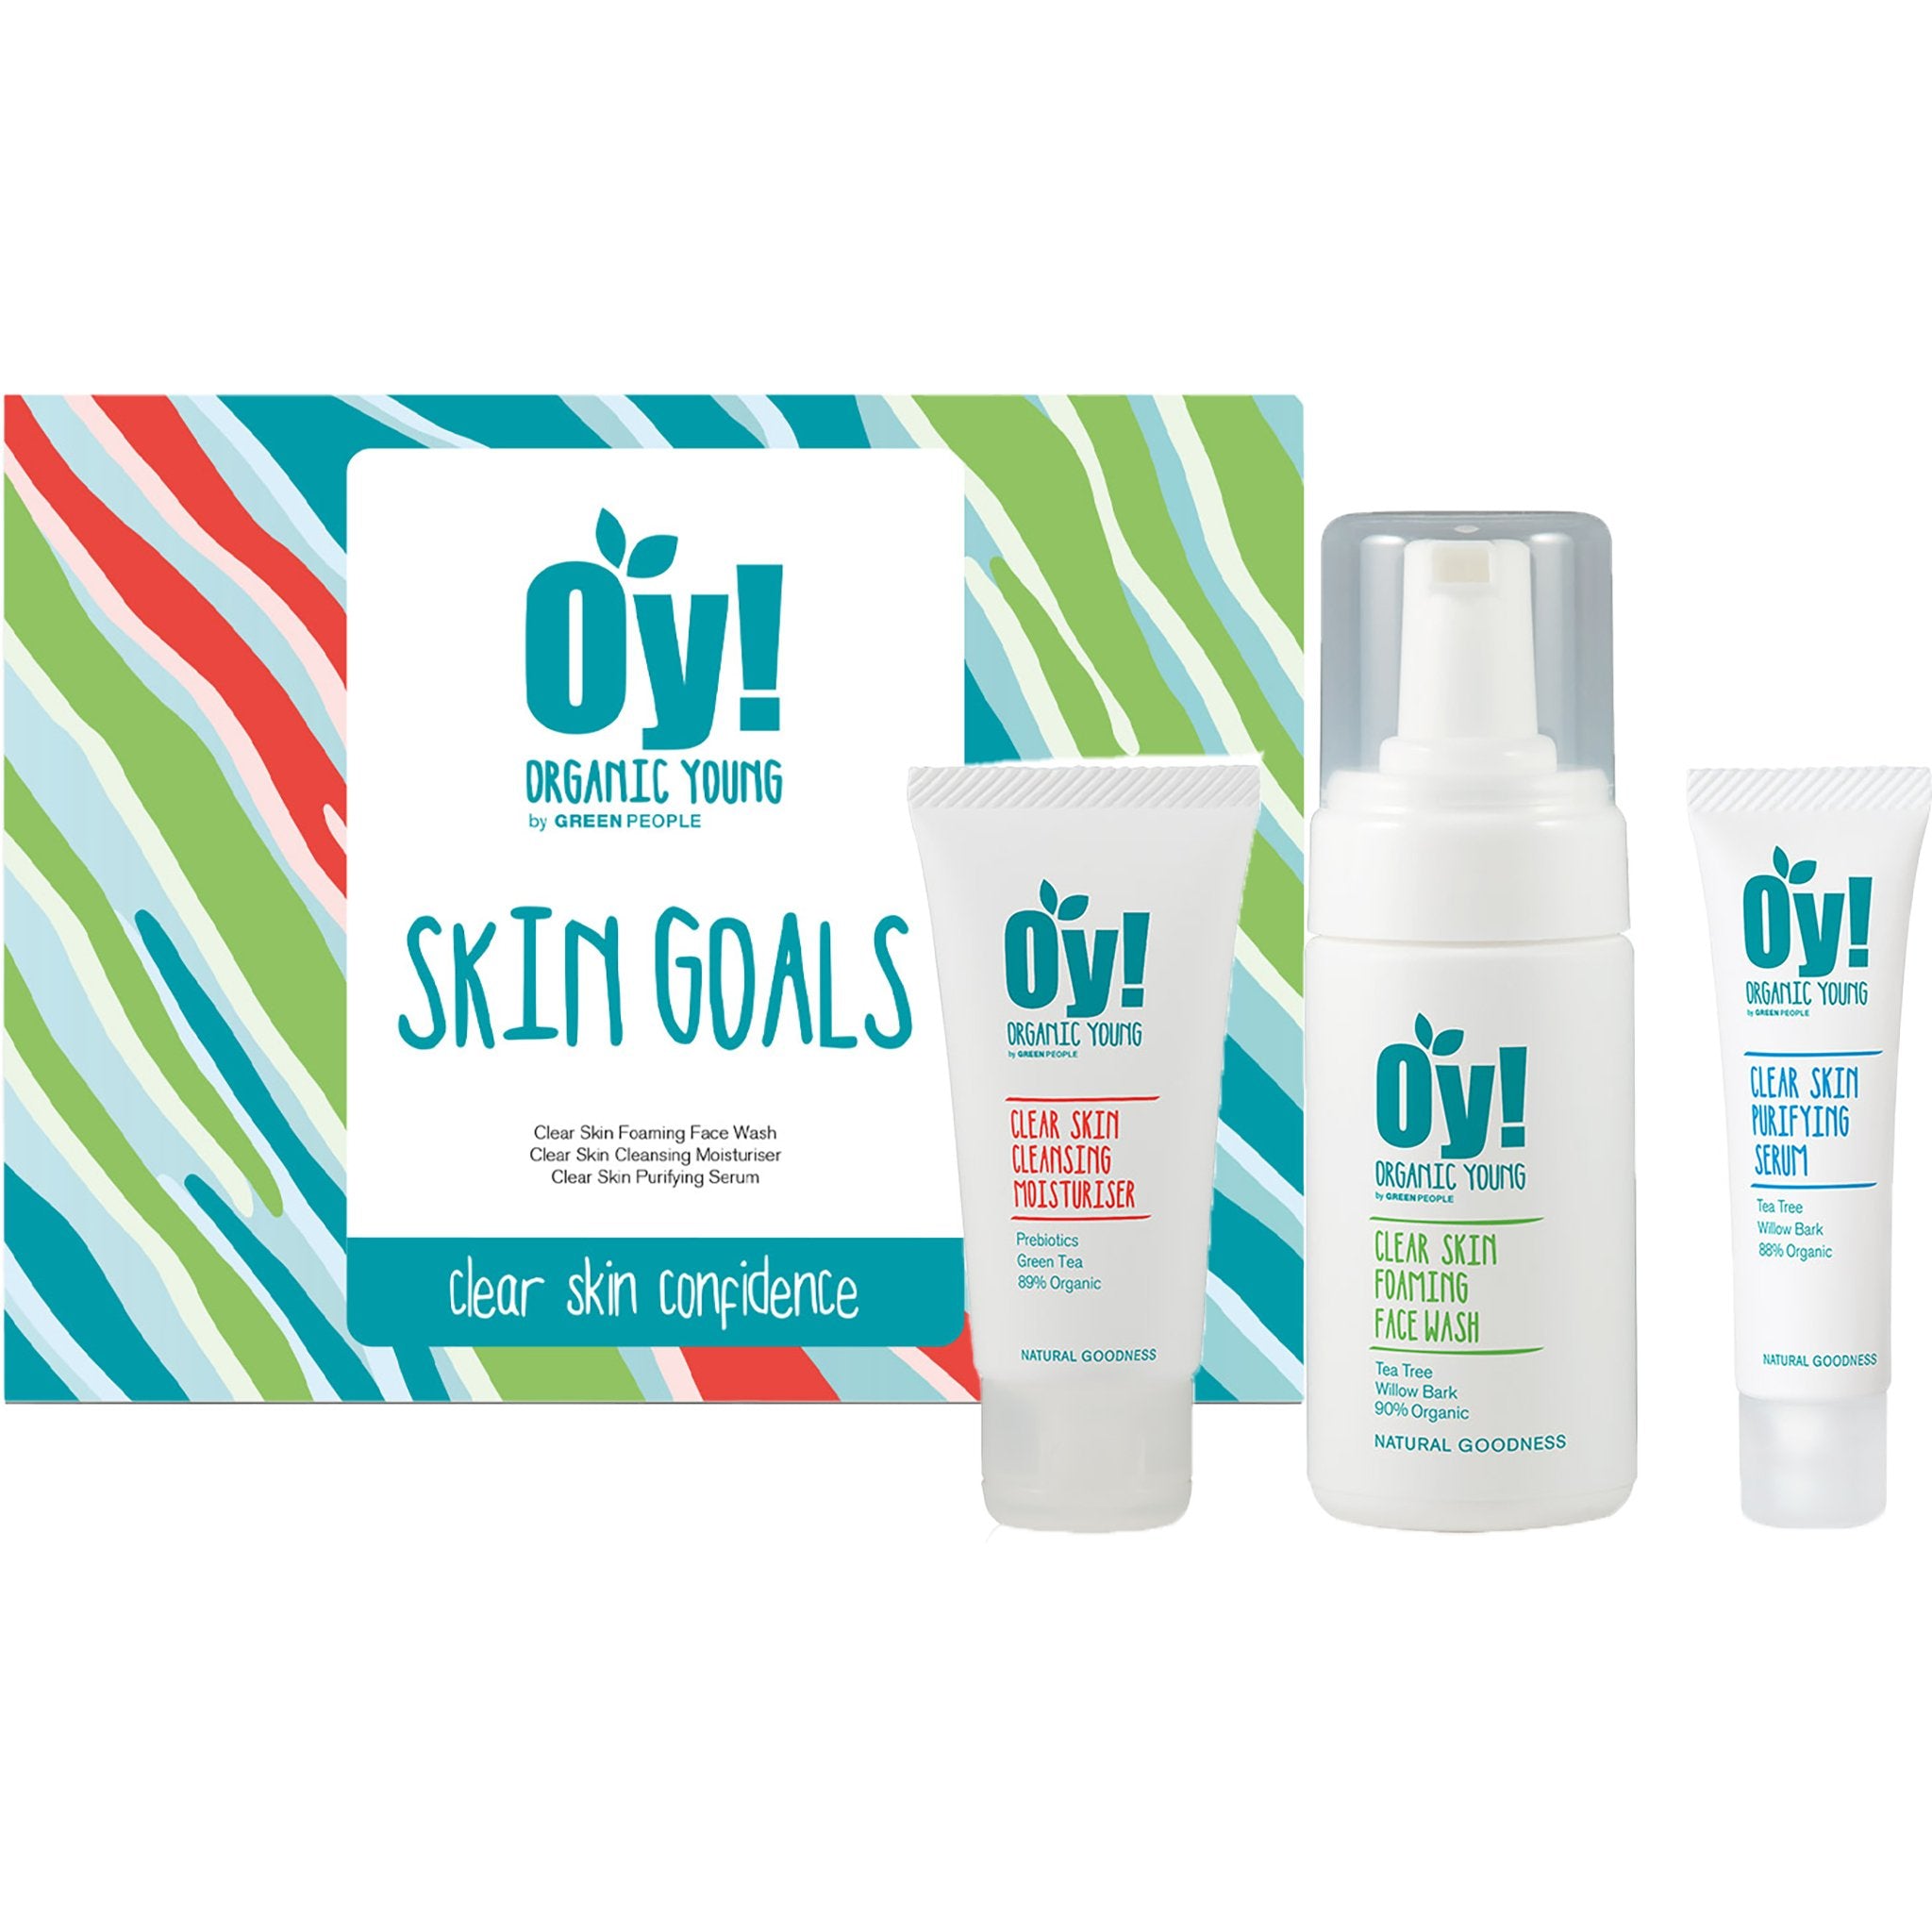 Oy! Skin Goals Gift Set - Worth £44 - mypure.co.uk